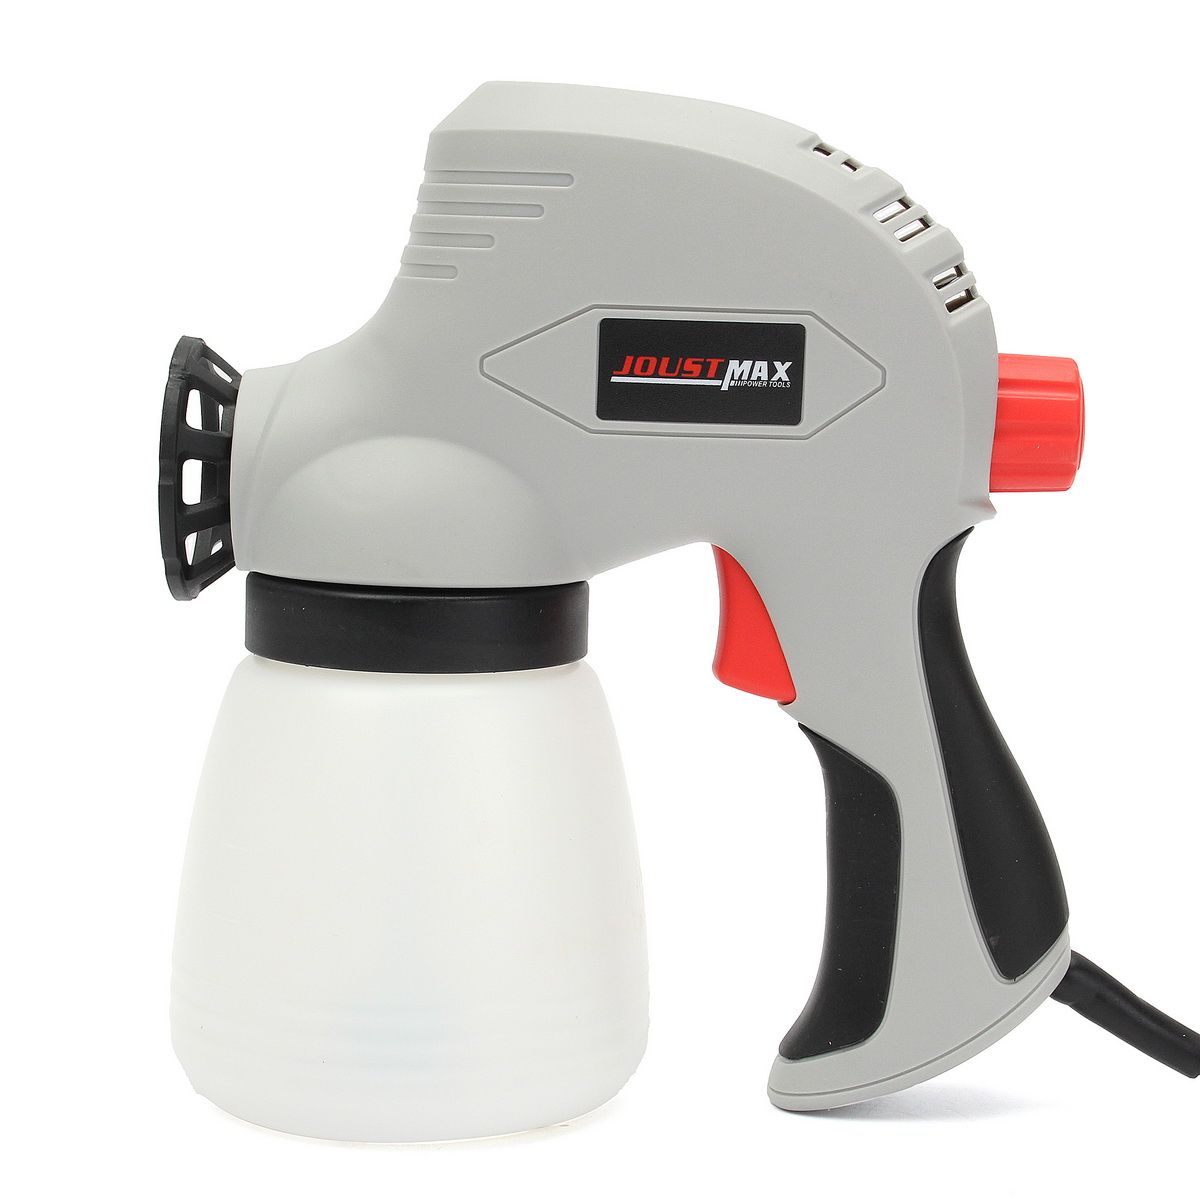 Joustmax-JST81001-120W-220V-Electronic-Spray-Gun-Craft-Decorating-Sandblasting-Gun-1131600